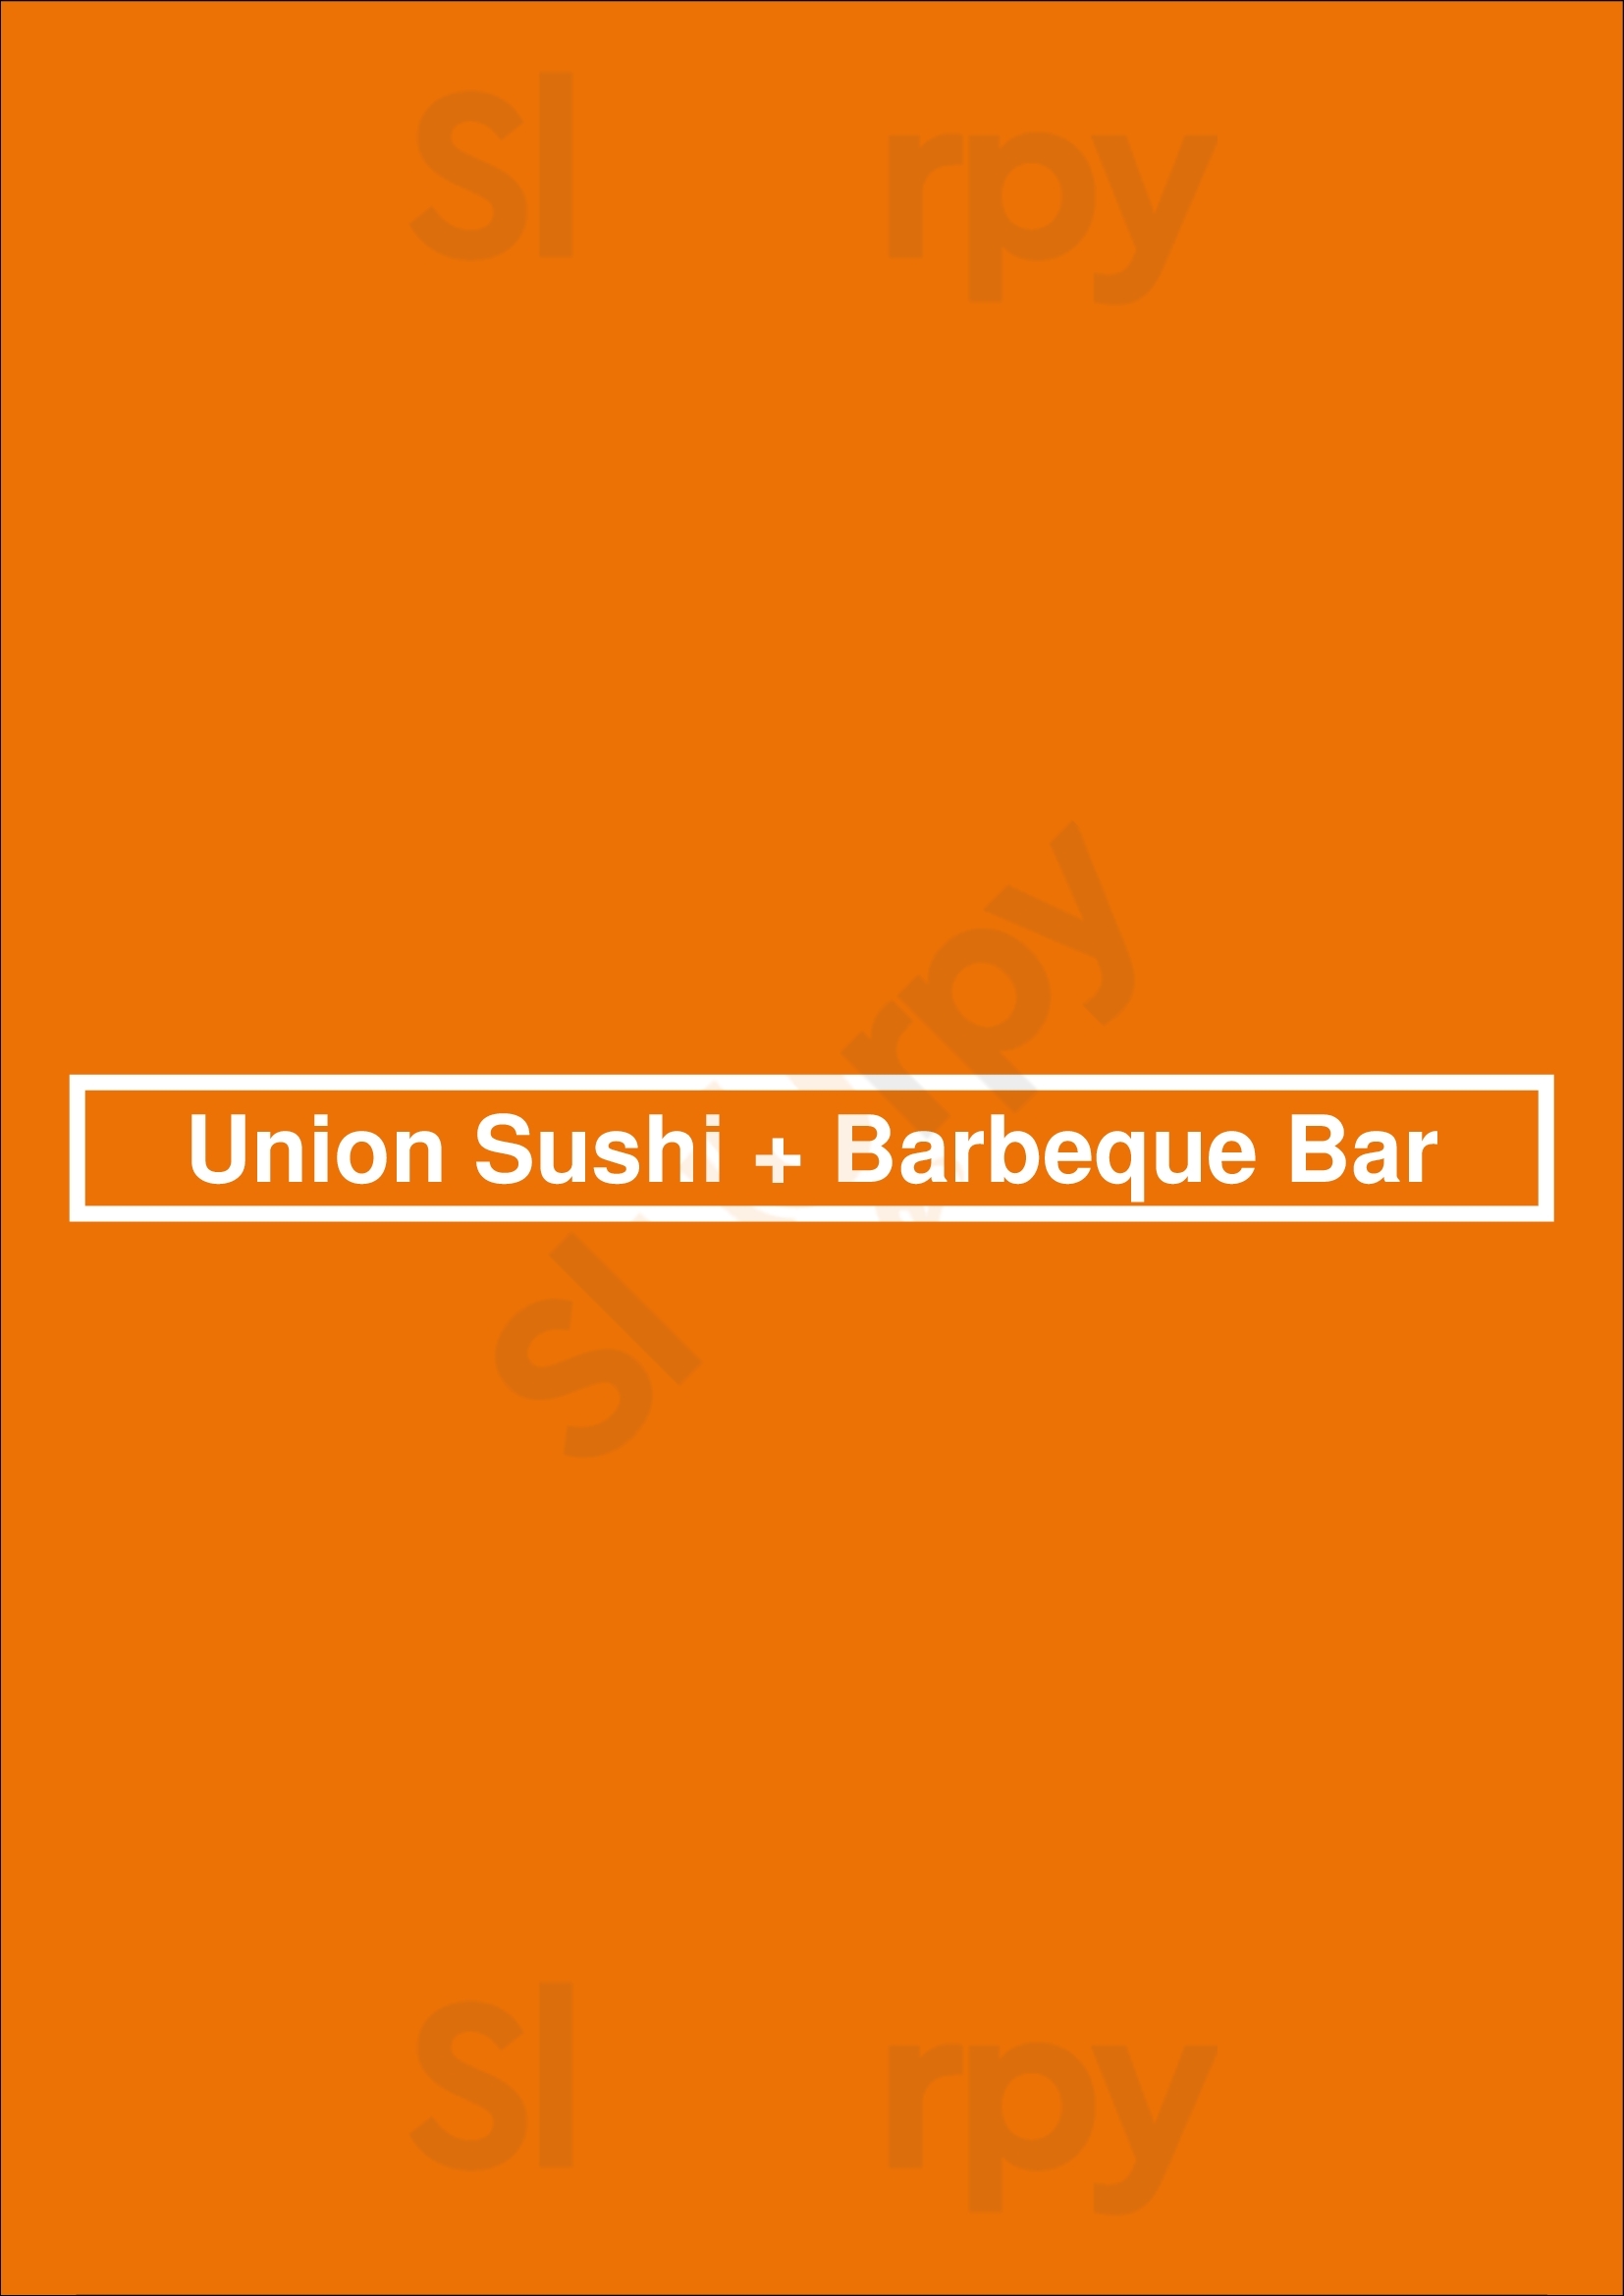 Union Sushi + Barbeque Bar Chicago Menu - 1